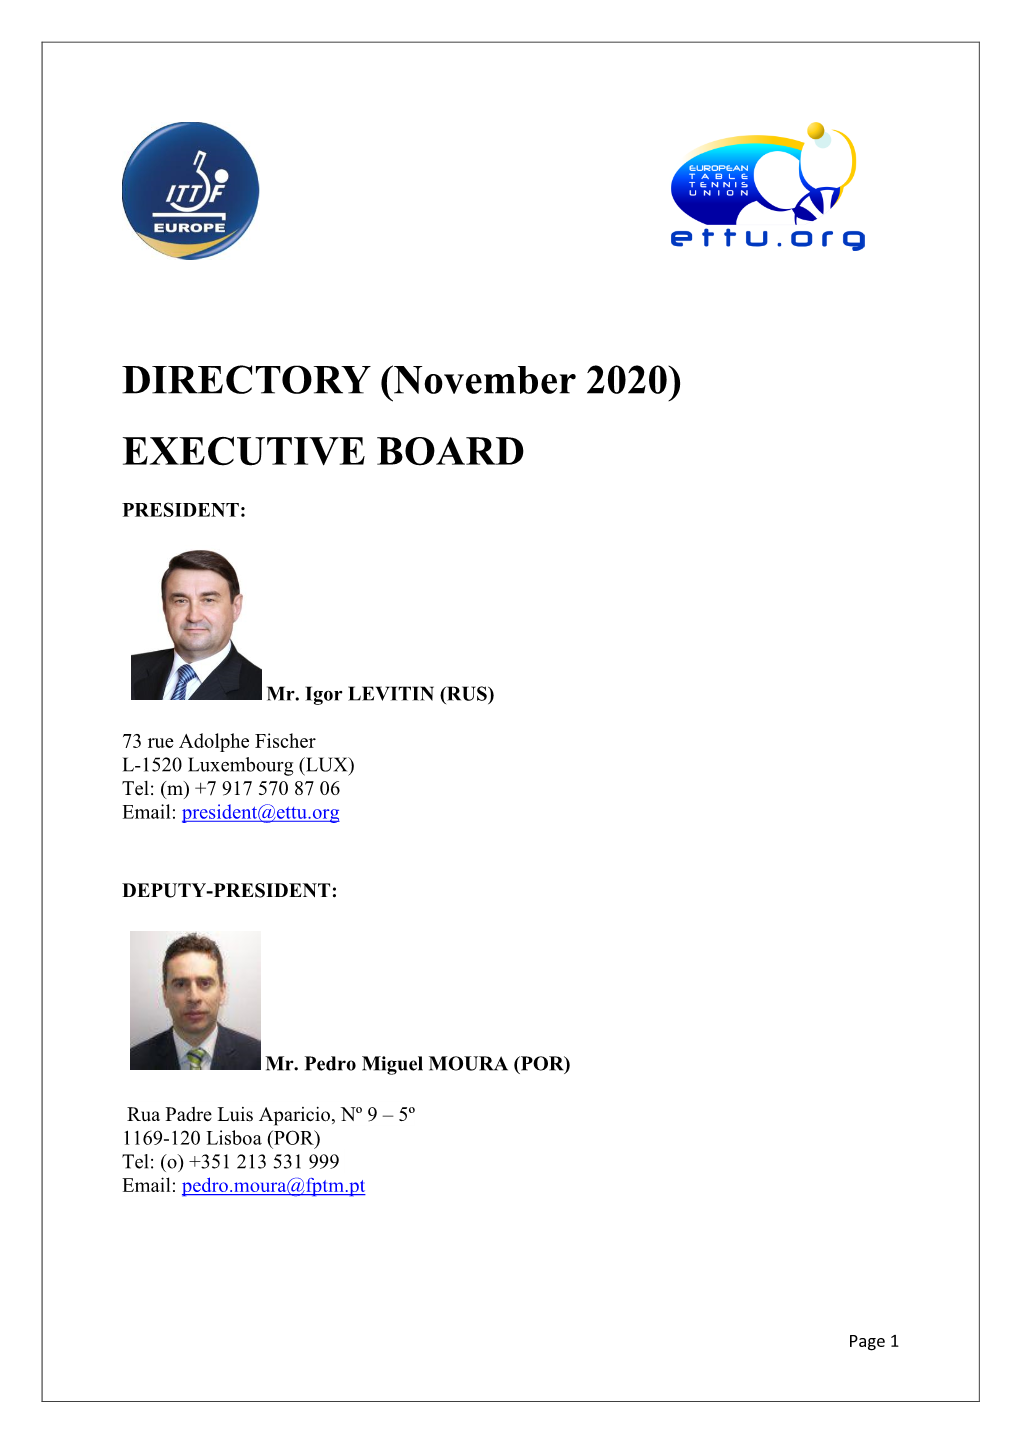 DIRECTORY (November 2020) EXECUTIVE BOARD